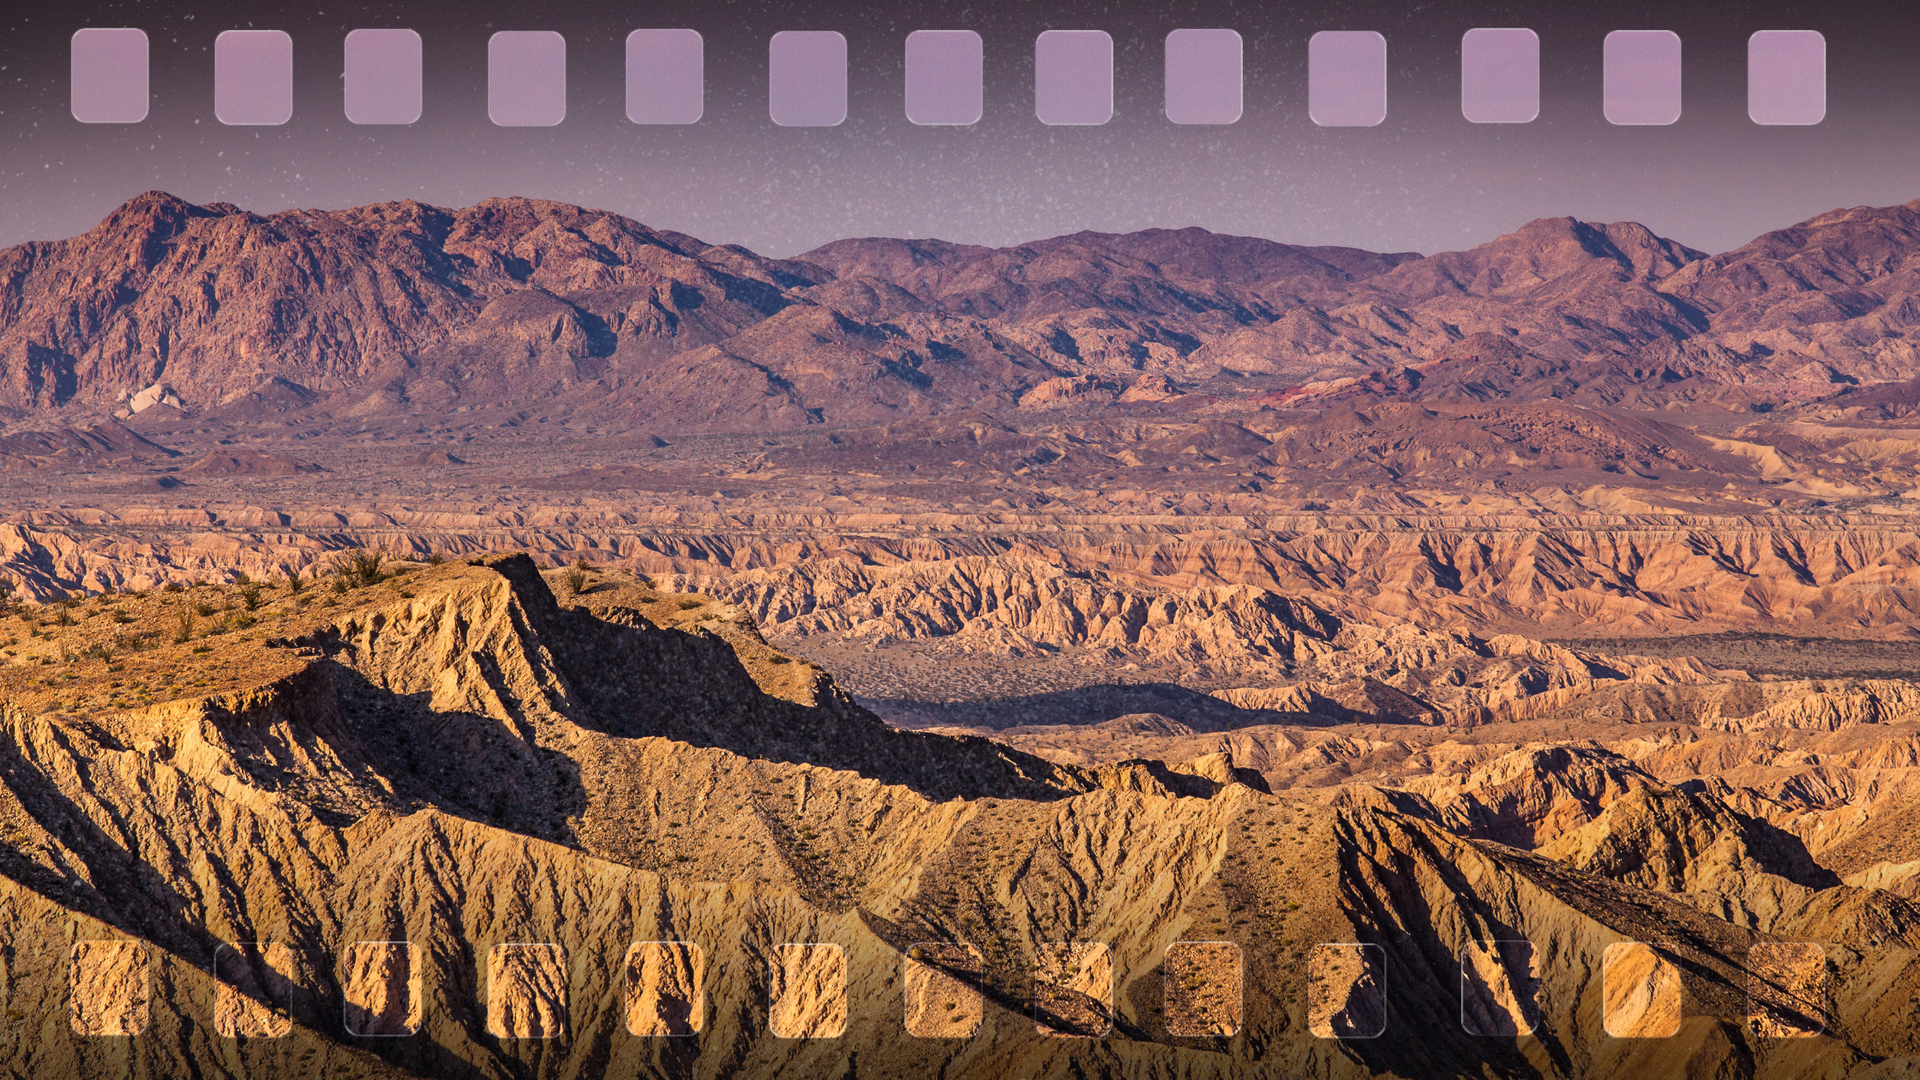 Films set in Anza-Borrego Desert State Park.